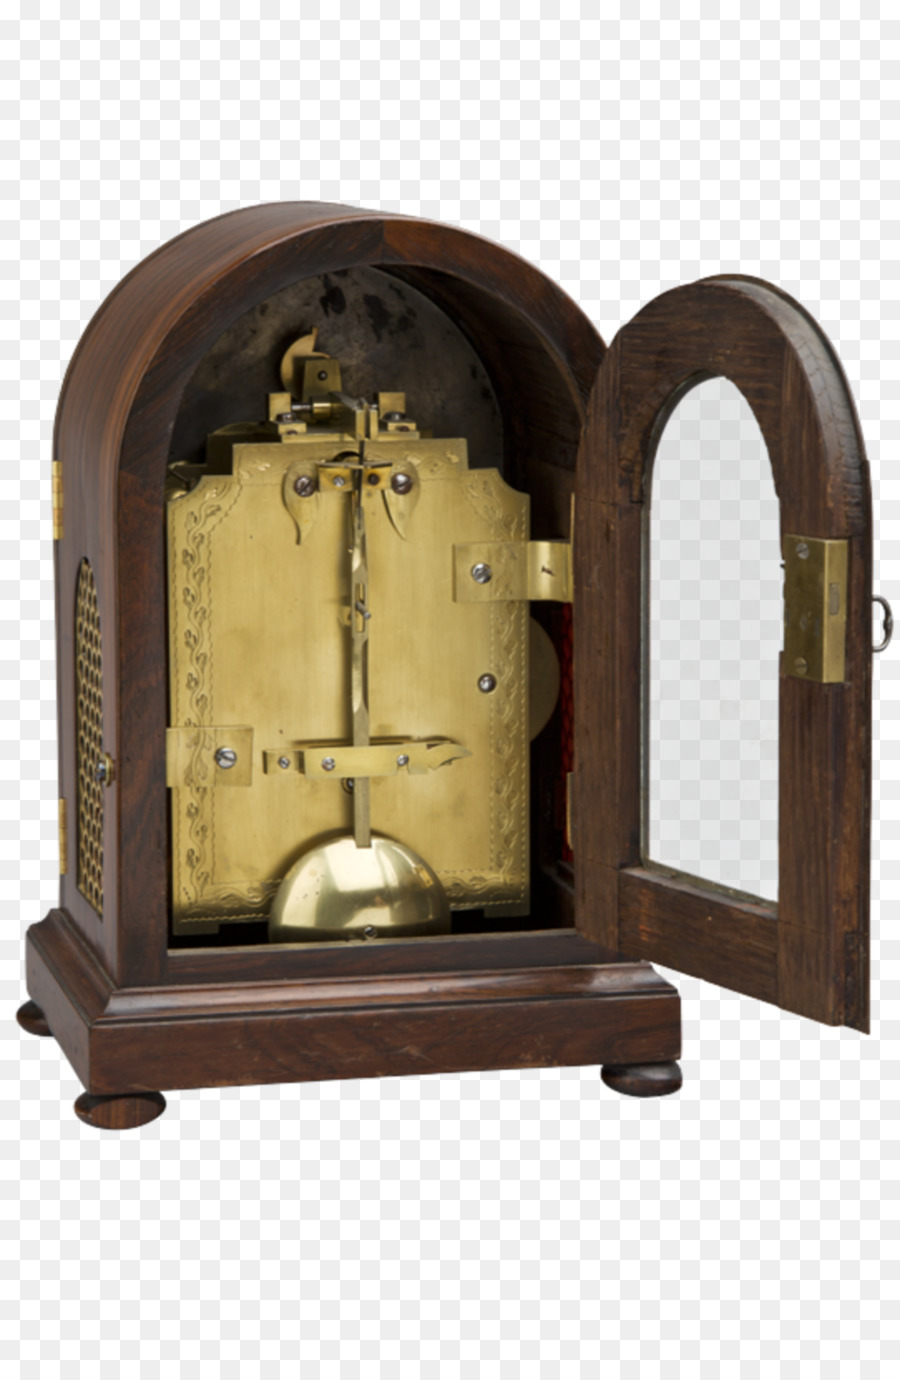 Orologio Antico - orologio